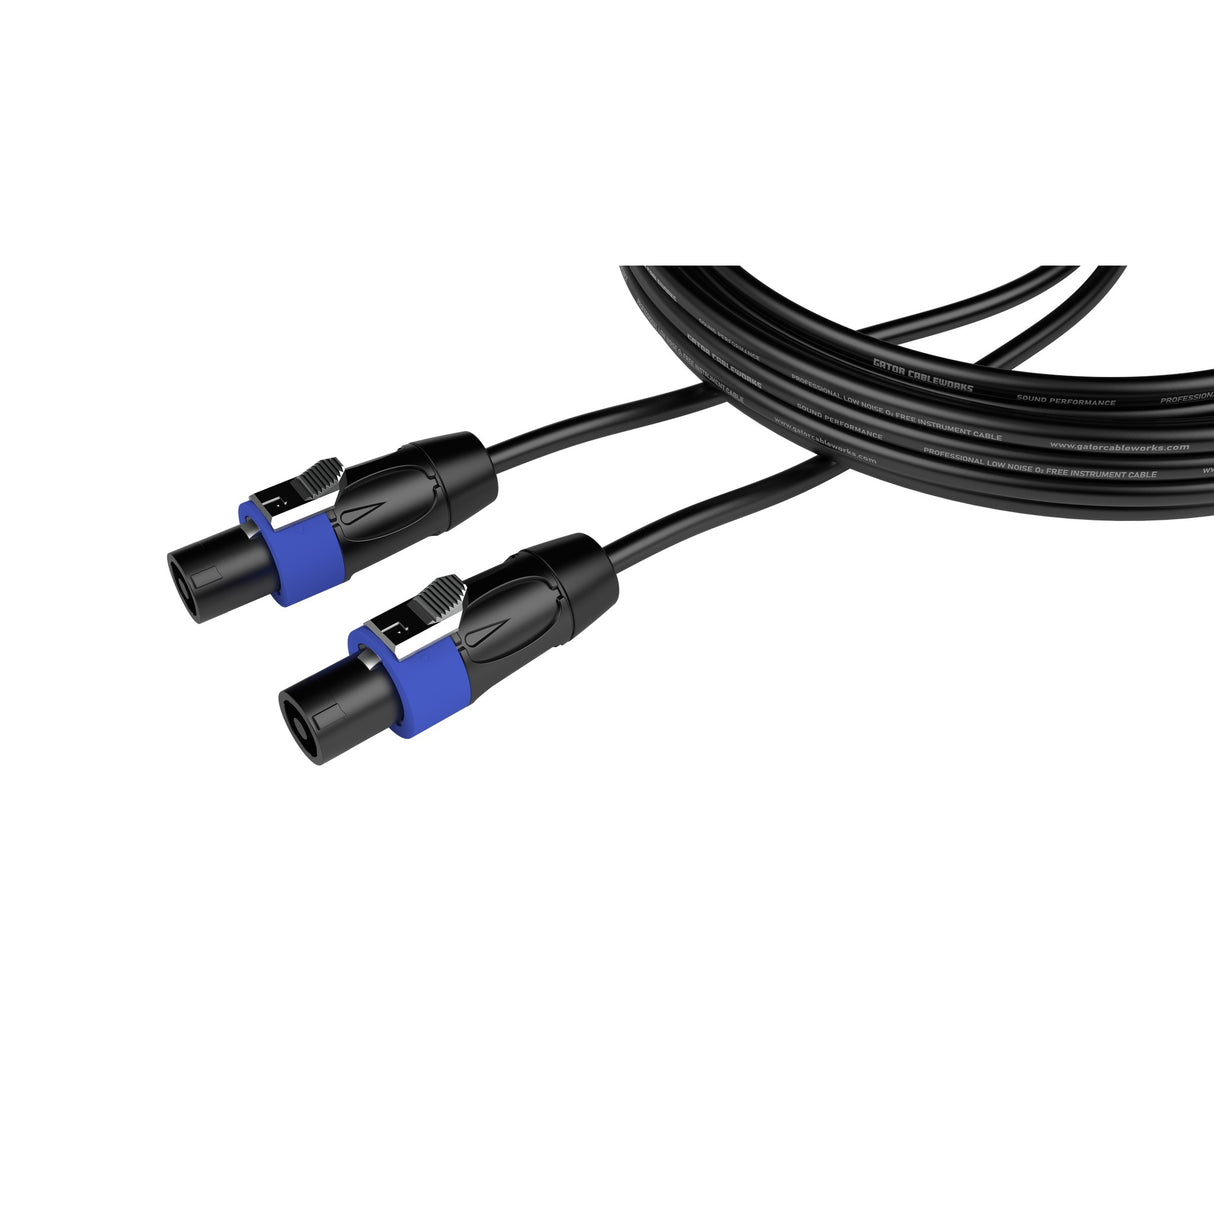 Gator CBW-HDLSPKR2TWLK-CBLE-15 Headliner Series Twist Lock Connector to Twist Lock Connector Speaker Cable, 15-Foot